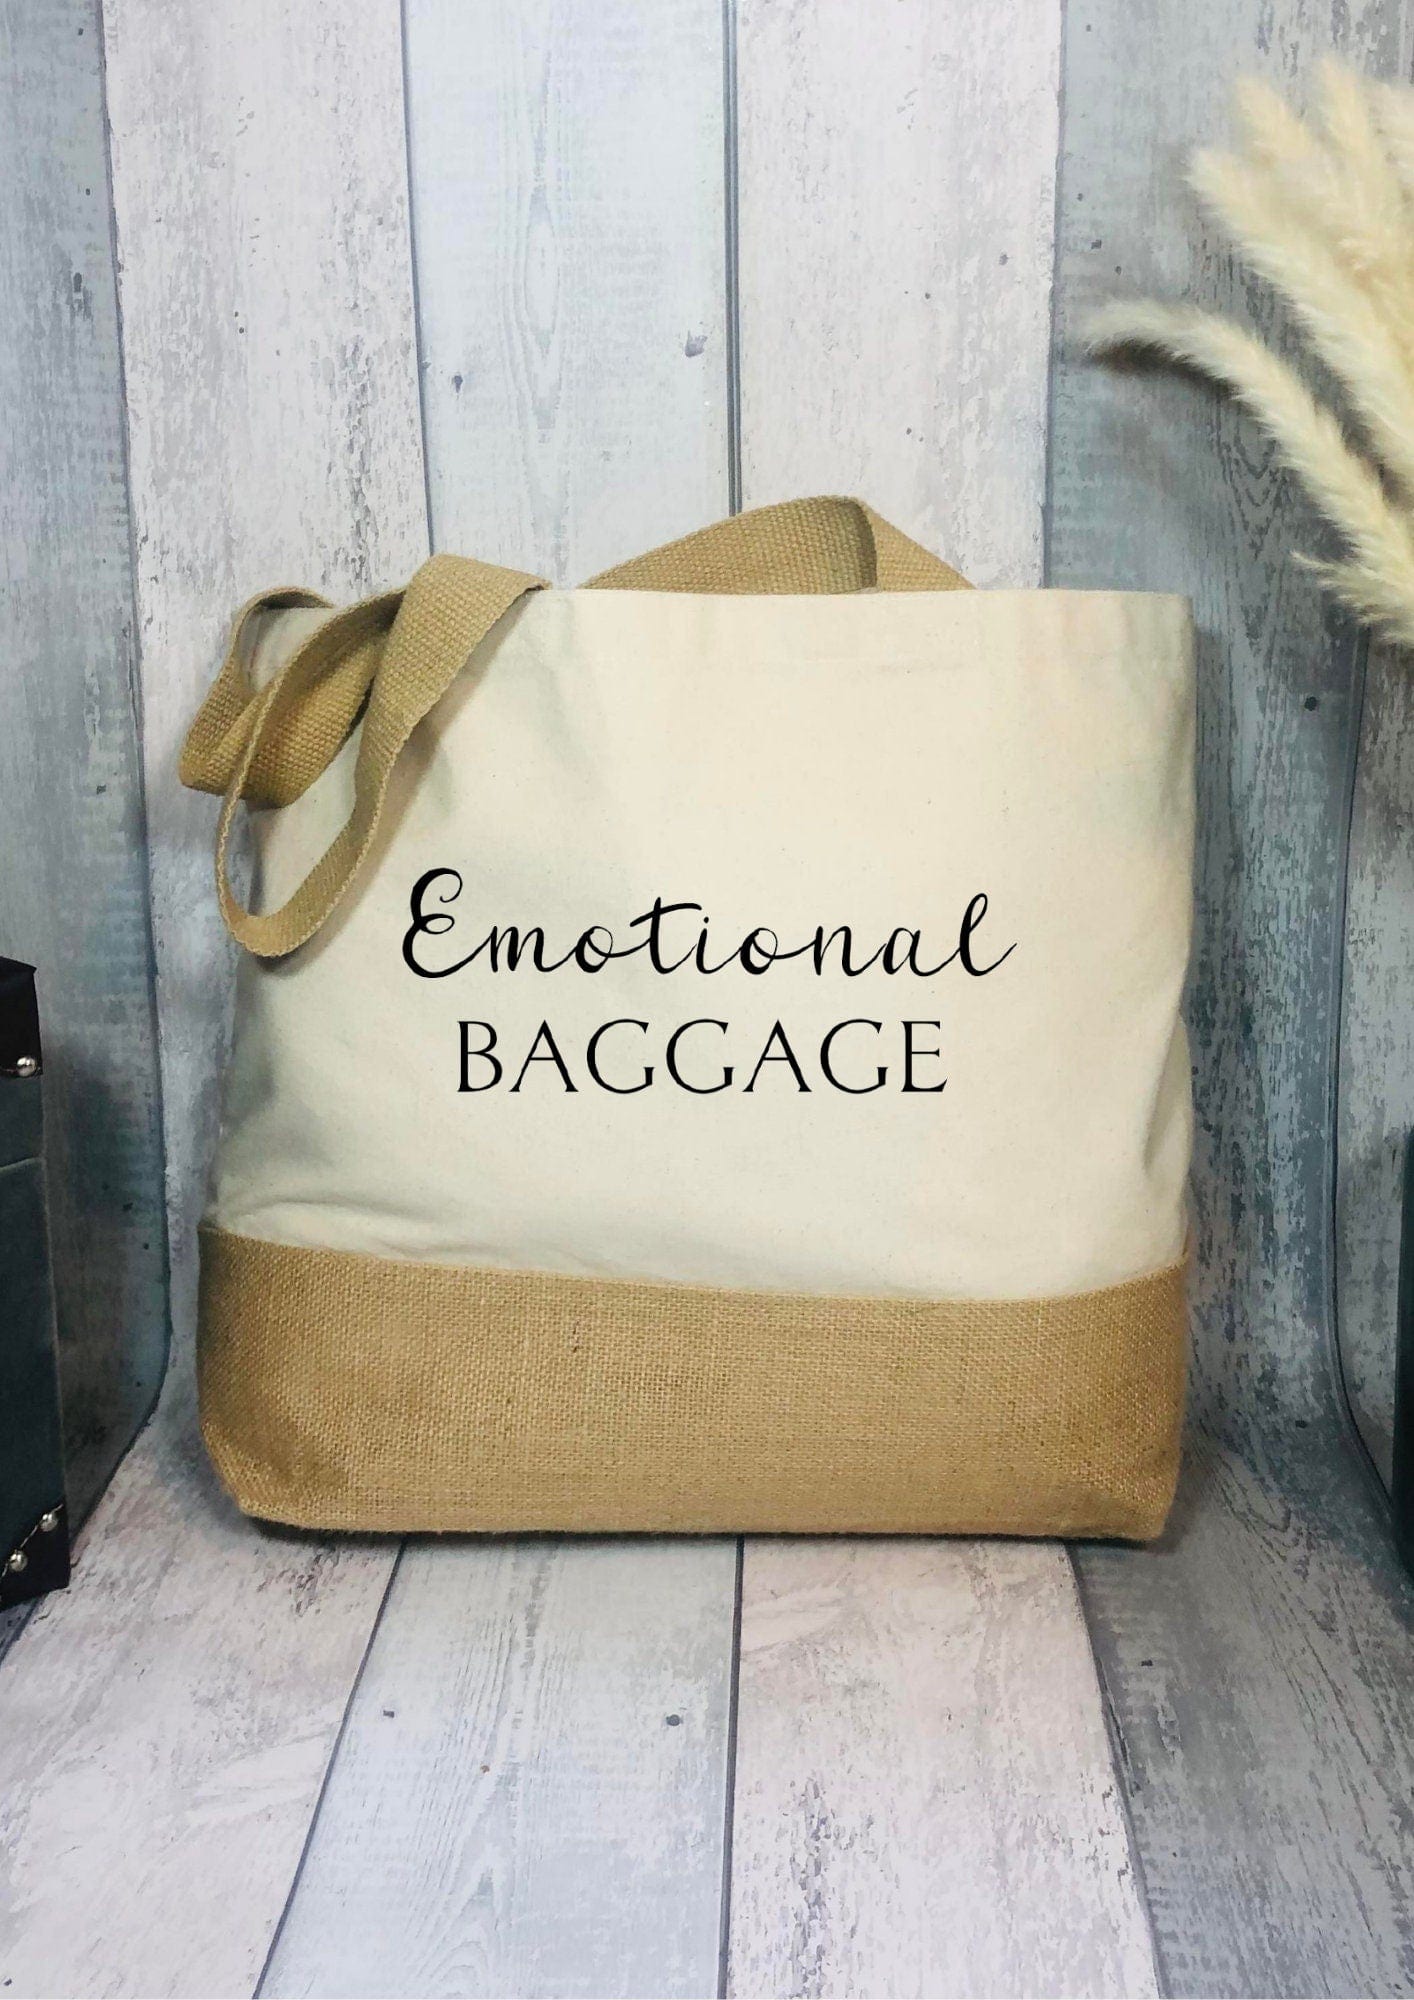 Lua Nova Shopping Totes ' Emotional Baggage '  Jute Canvas Tote Bag